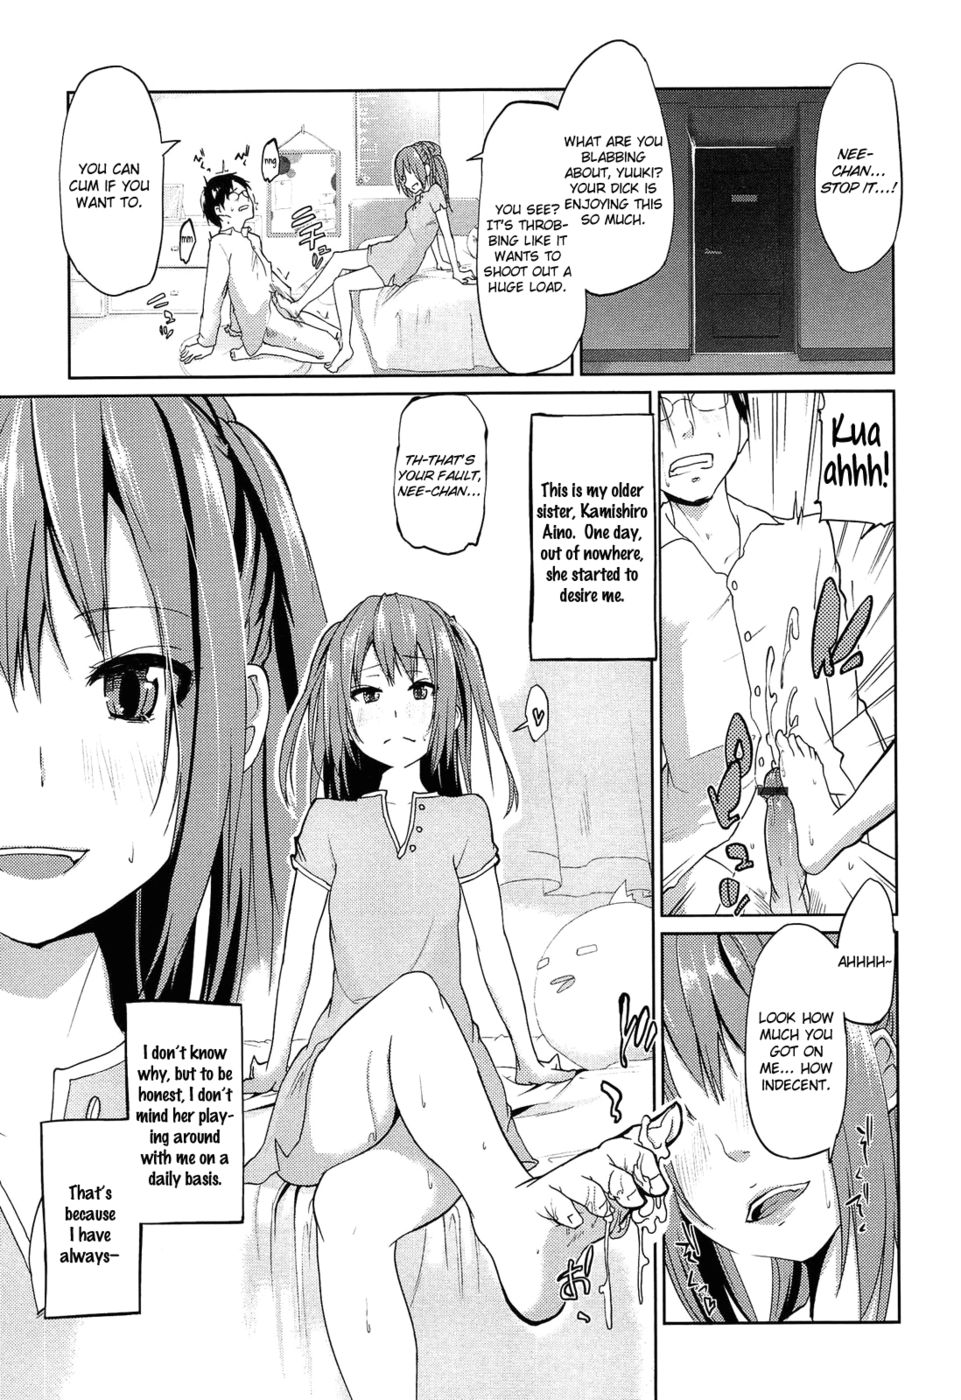 Hentai Manga Comic-I'm No Match For My Older Sister-Read-1